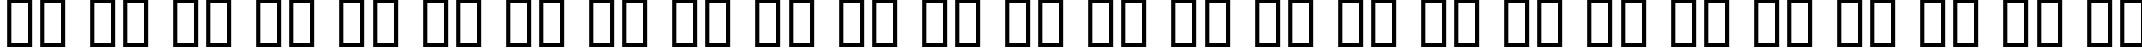 Пример написания английского алфавита шрифтом B Ferdosi